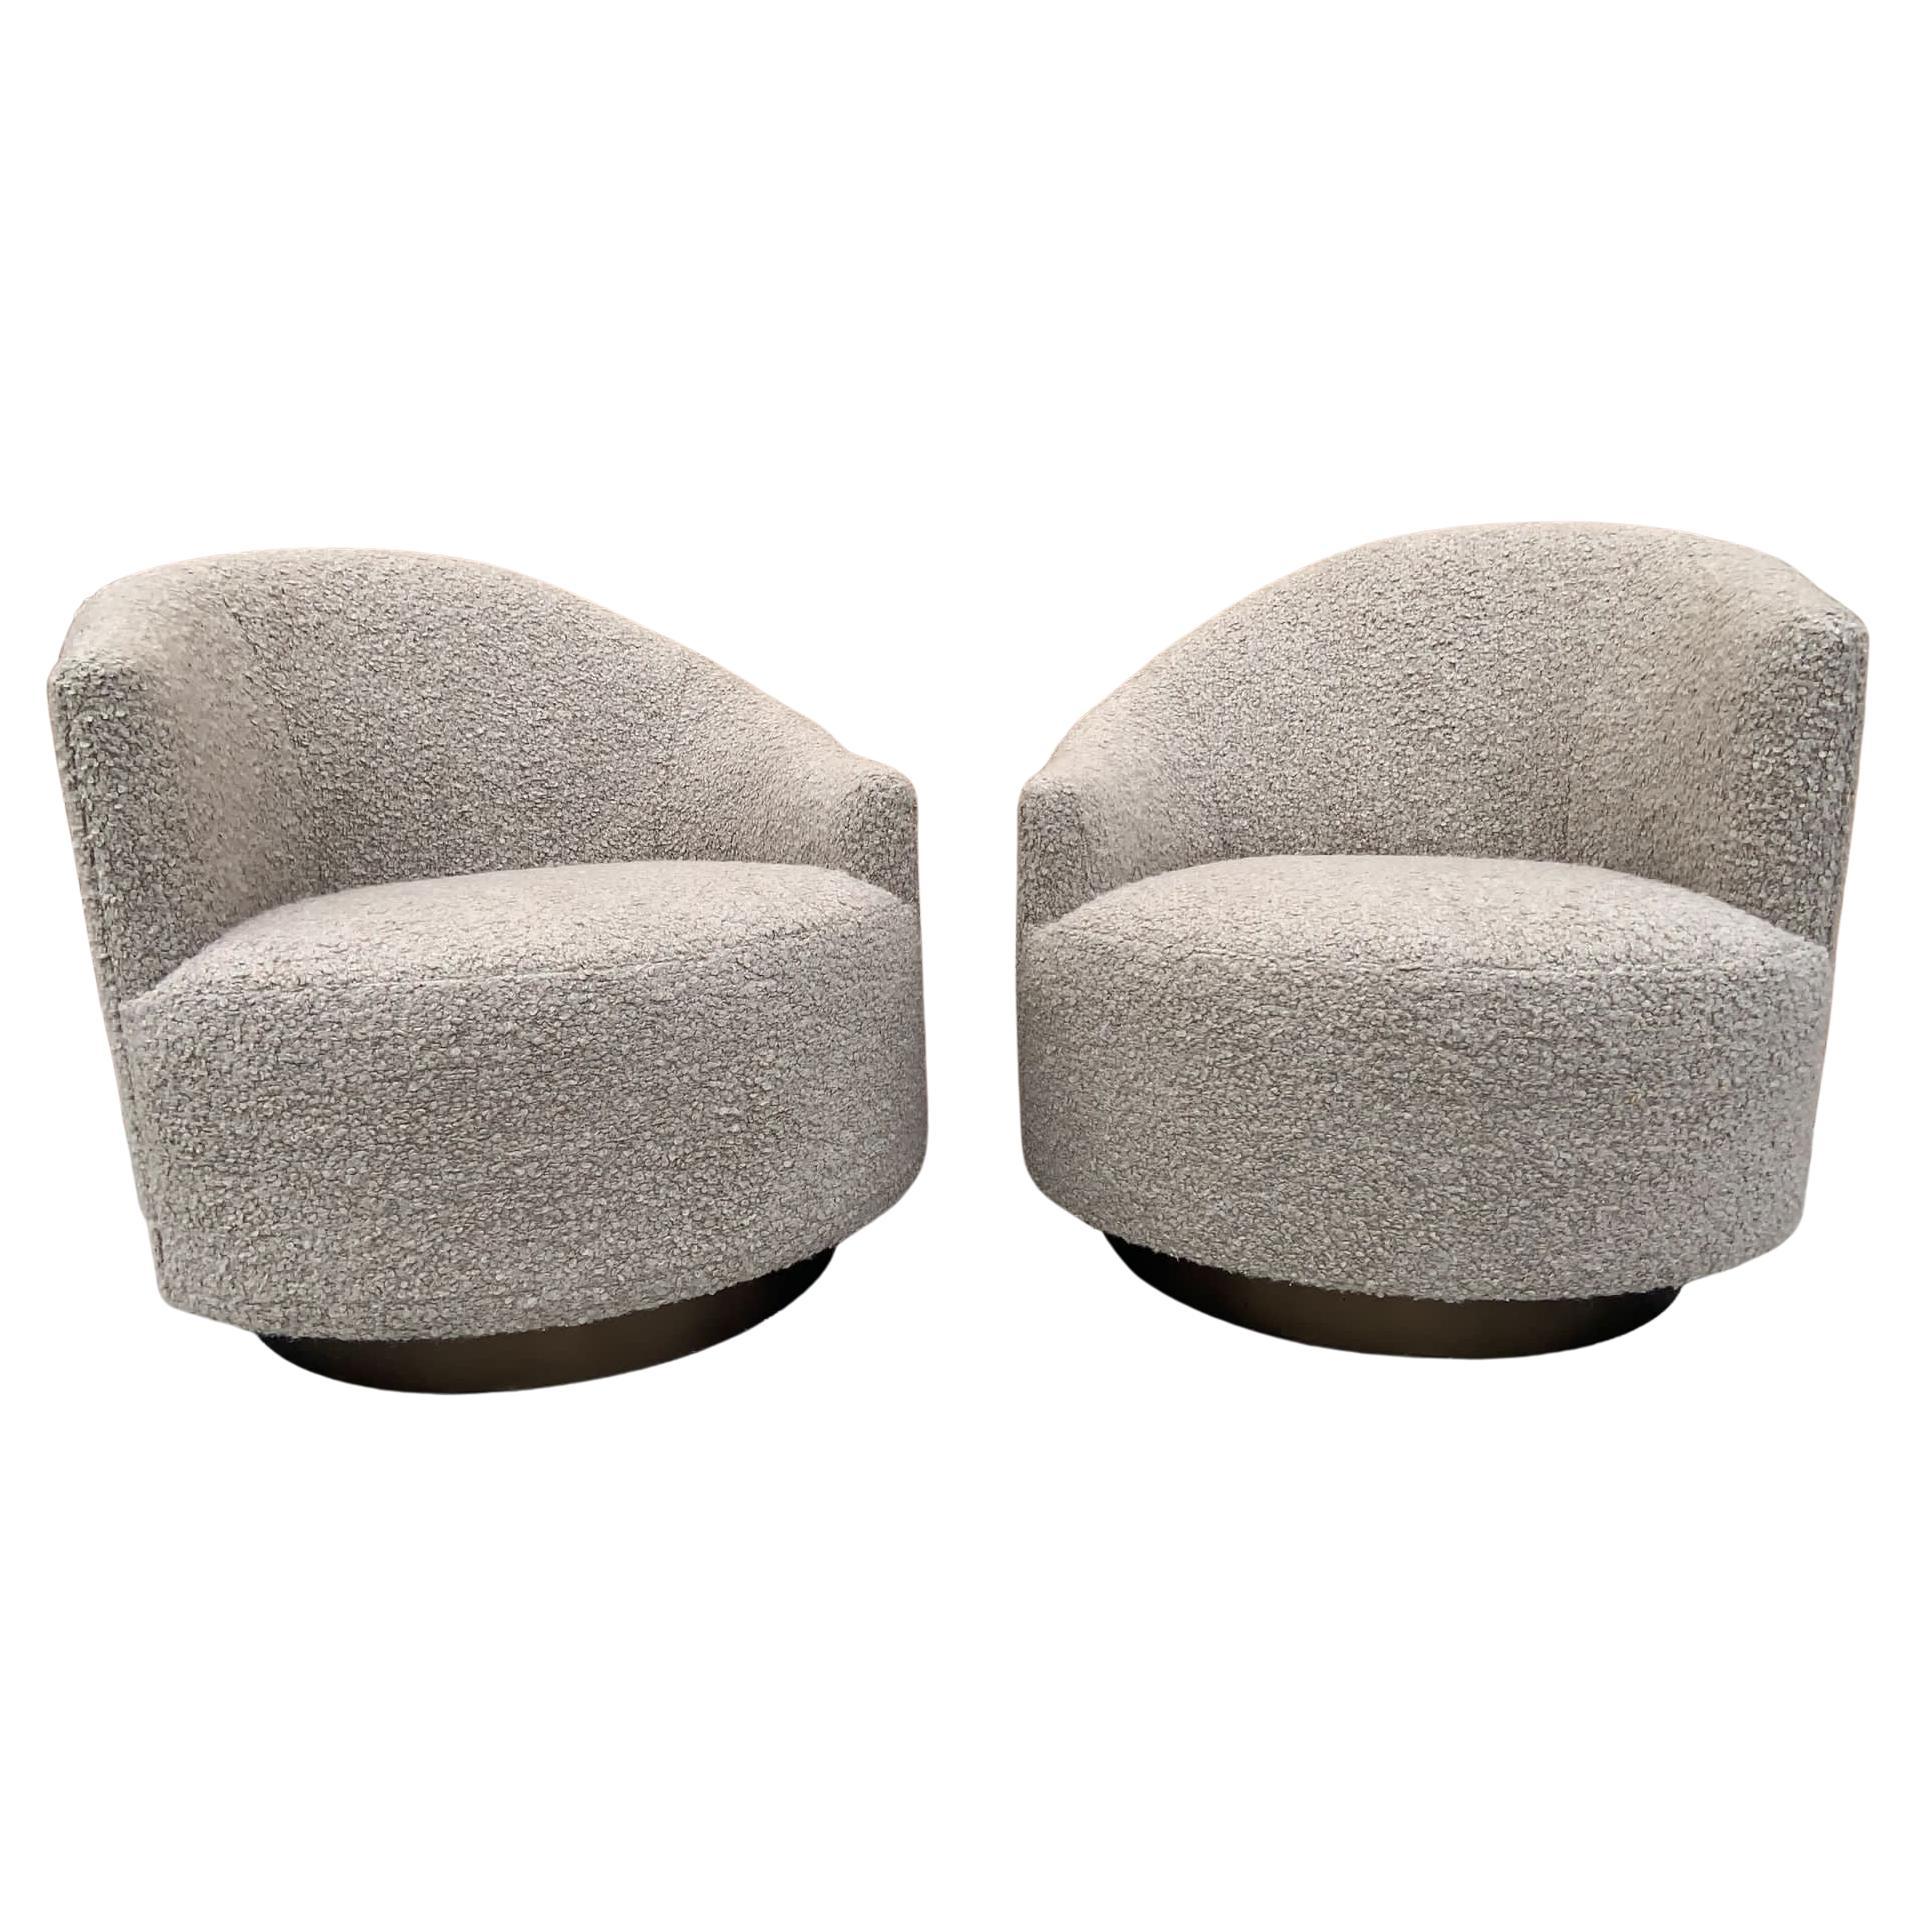 Post Modern Asymmetrical Barrel Back Swivel Chairs Newly Reupholsterd in Cream bouclé on a Bronze Base

circa:1990

Dimensions:
H 32”
W 31”
D 32”
Seat H 17”.